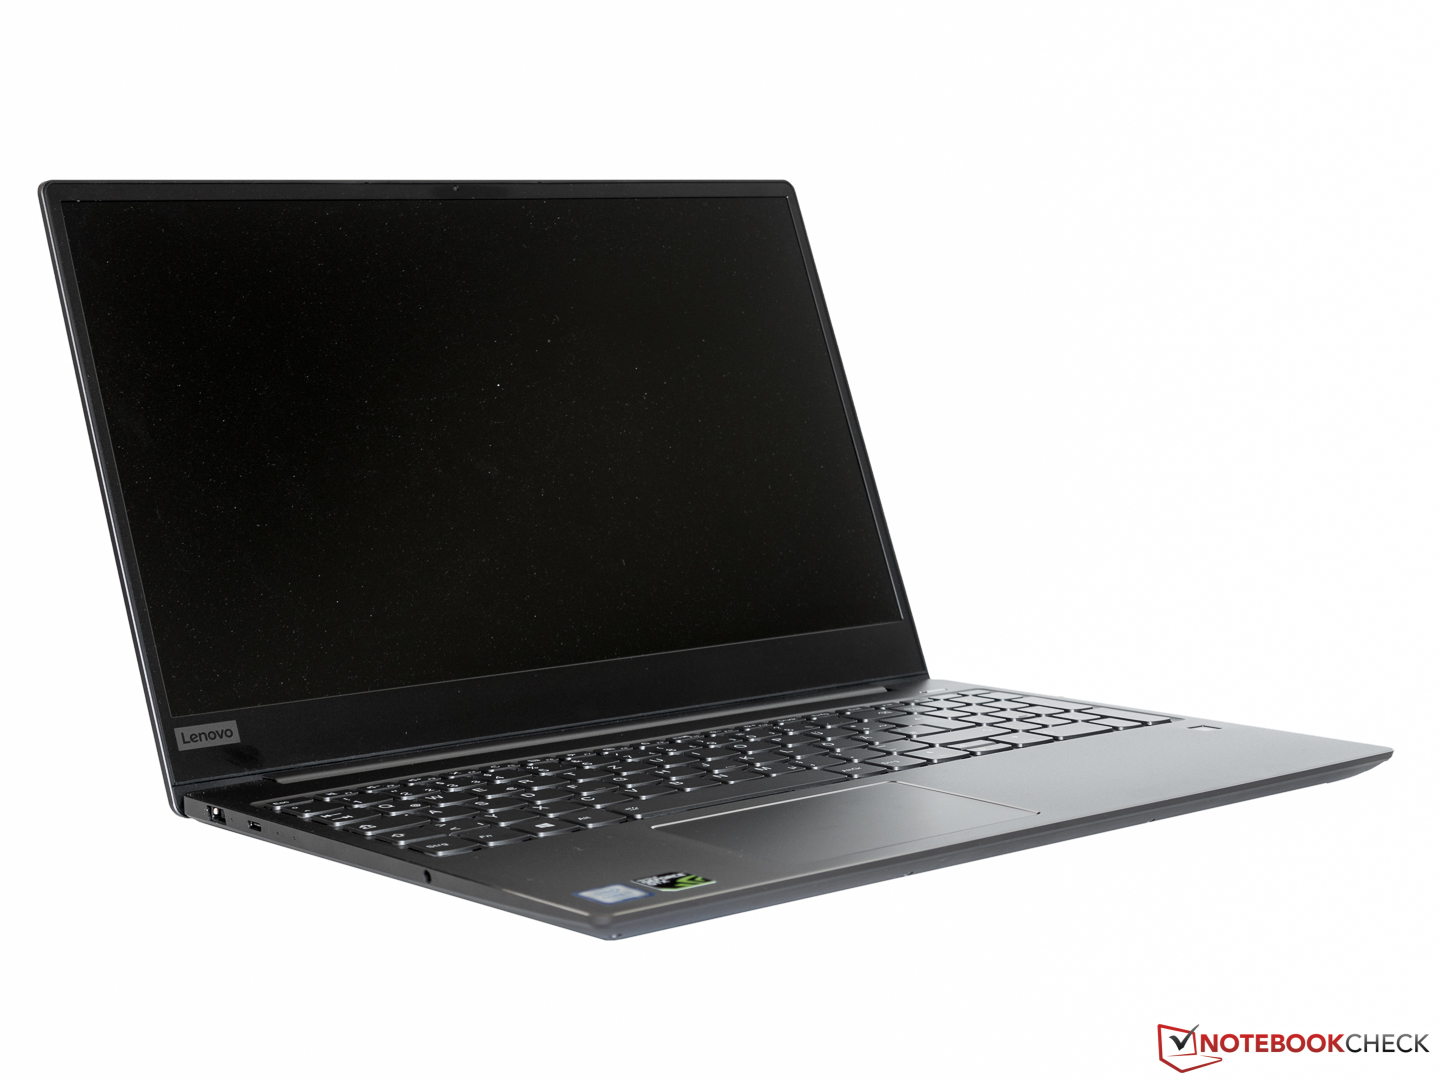 Lenovo Ideapad 720S-15IKB (i7-7700HQ, GTX 1050 Ti Max-Q, SSD 512 GB) Laptop  Review  Reviews